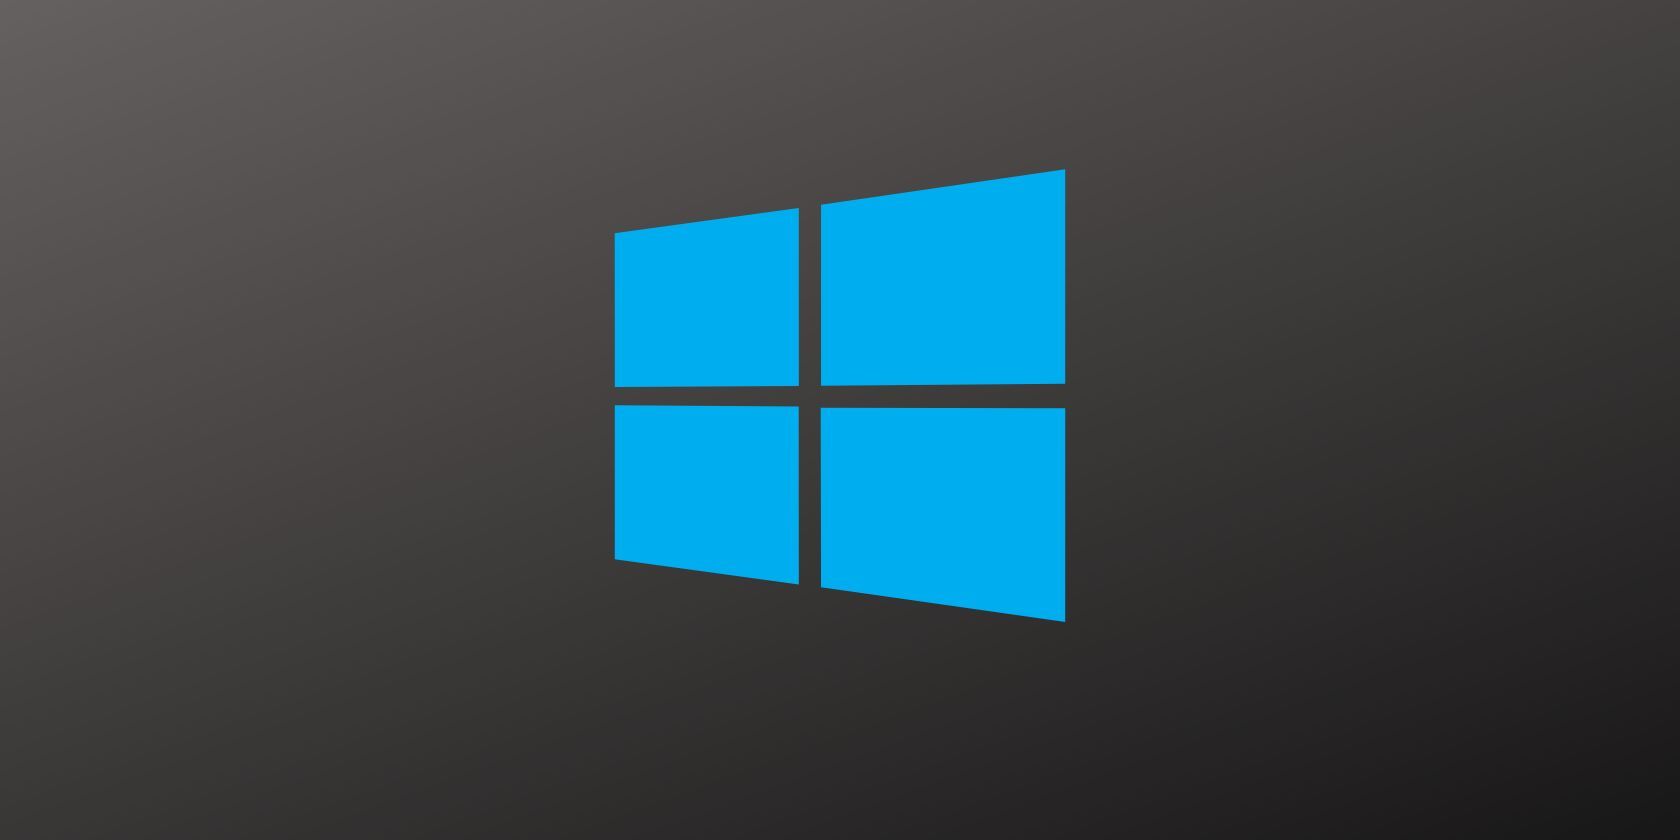 Blue MS Windows logo seen on black background